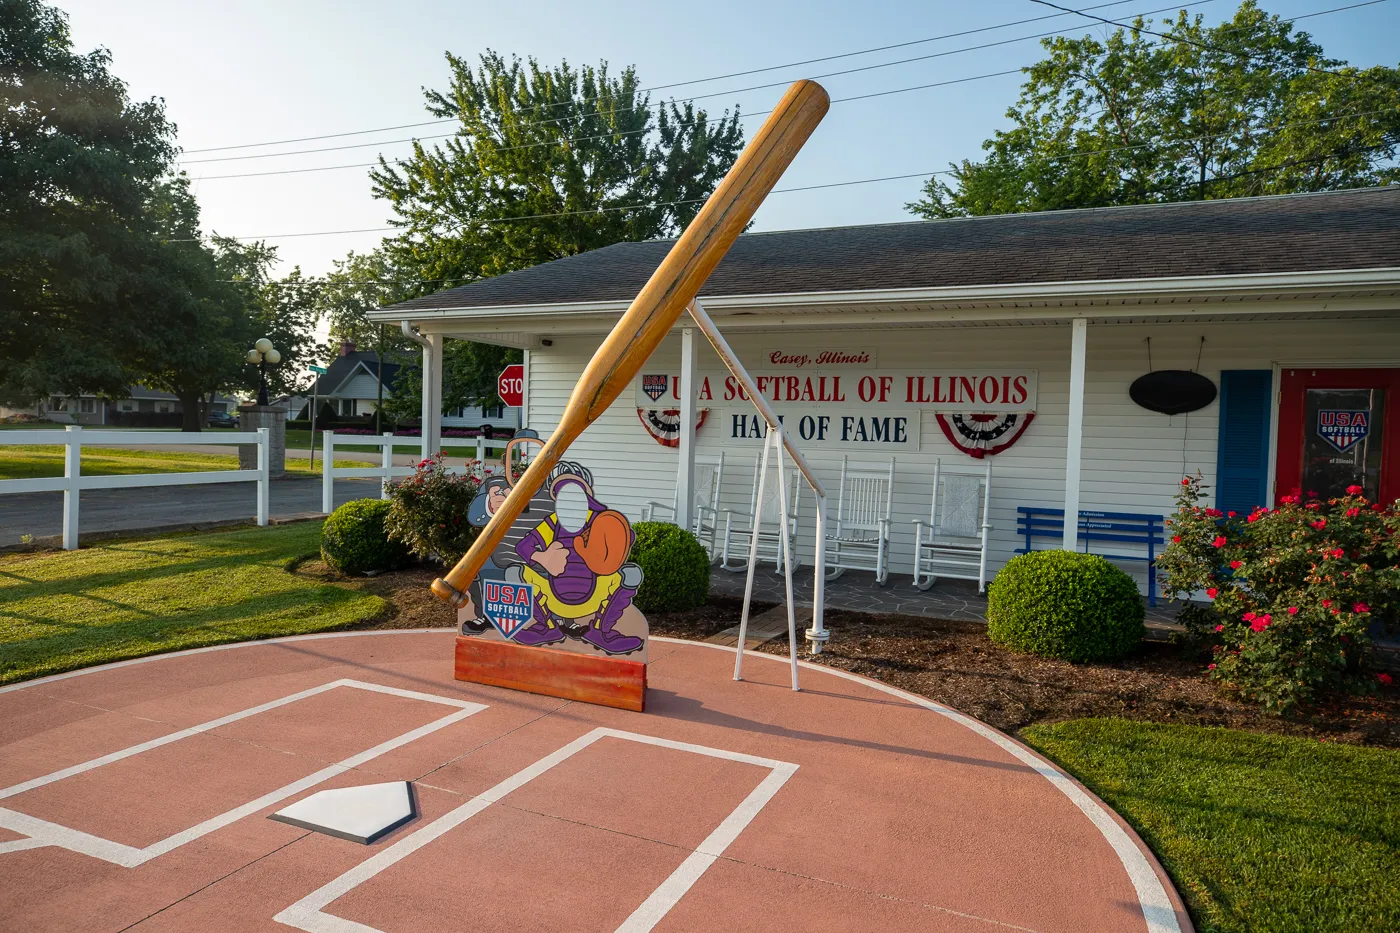 Big Baseball Bat in Casey, Illinois & USA Softball of Illinois Hall of Fame